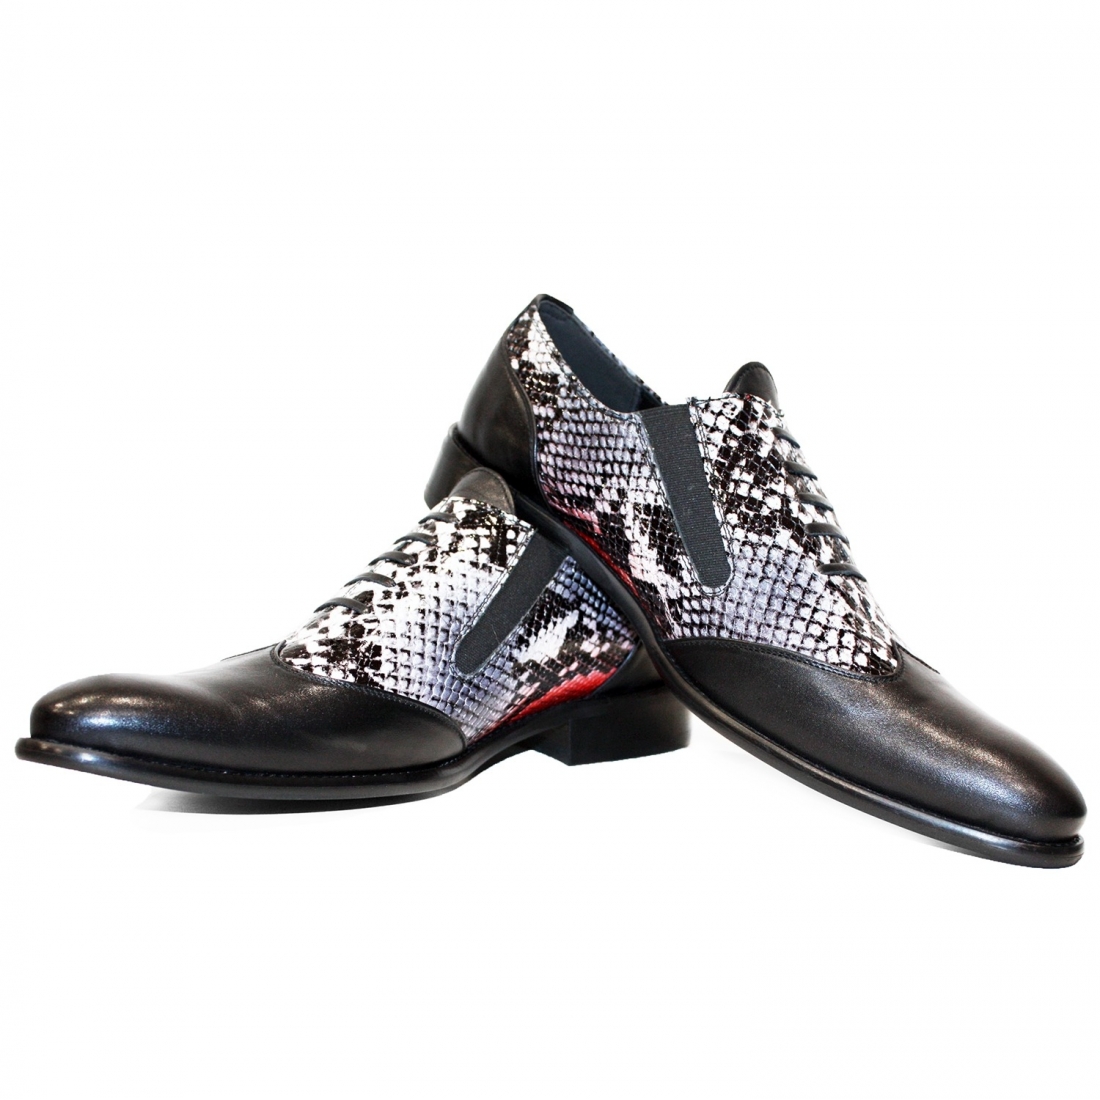 Modello Triumpherro - Buty Wsuwane - Handmade Colorful Italian Leather Shoes